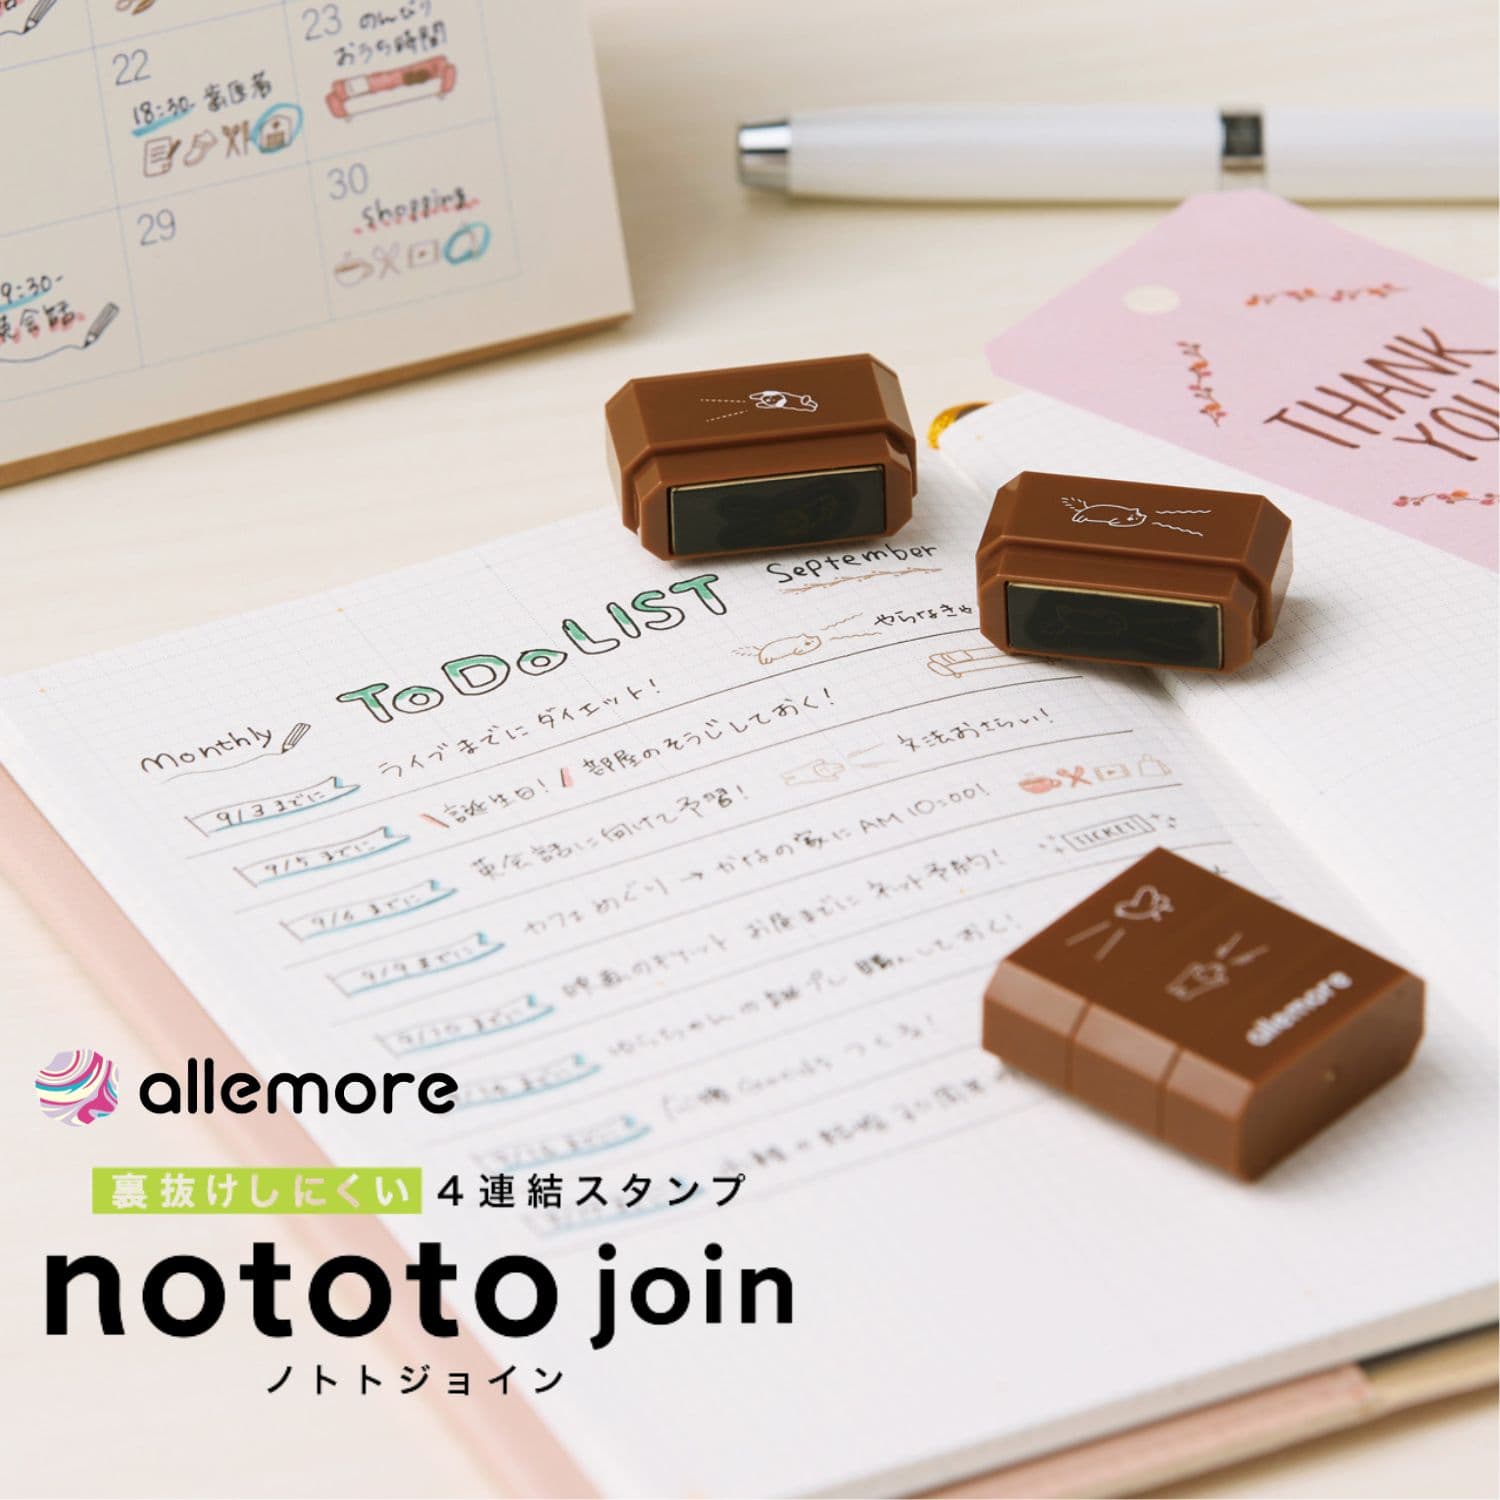 nototo join (ノトト ジョイン)_1